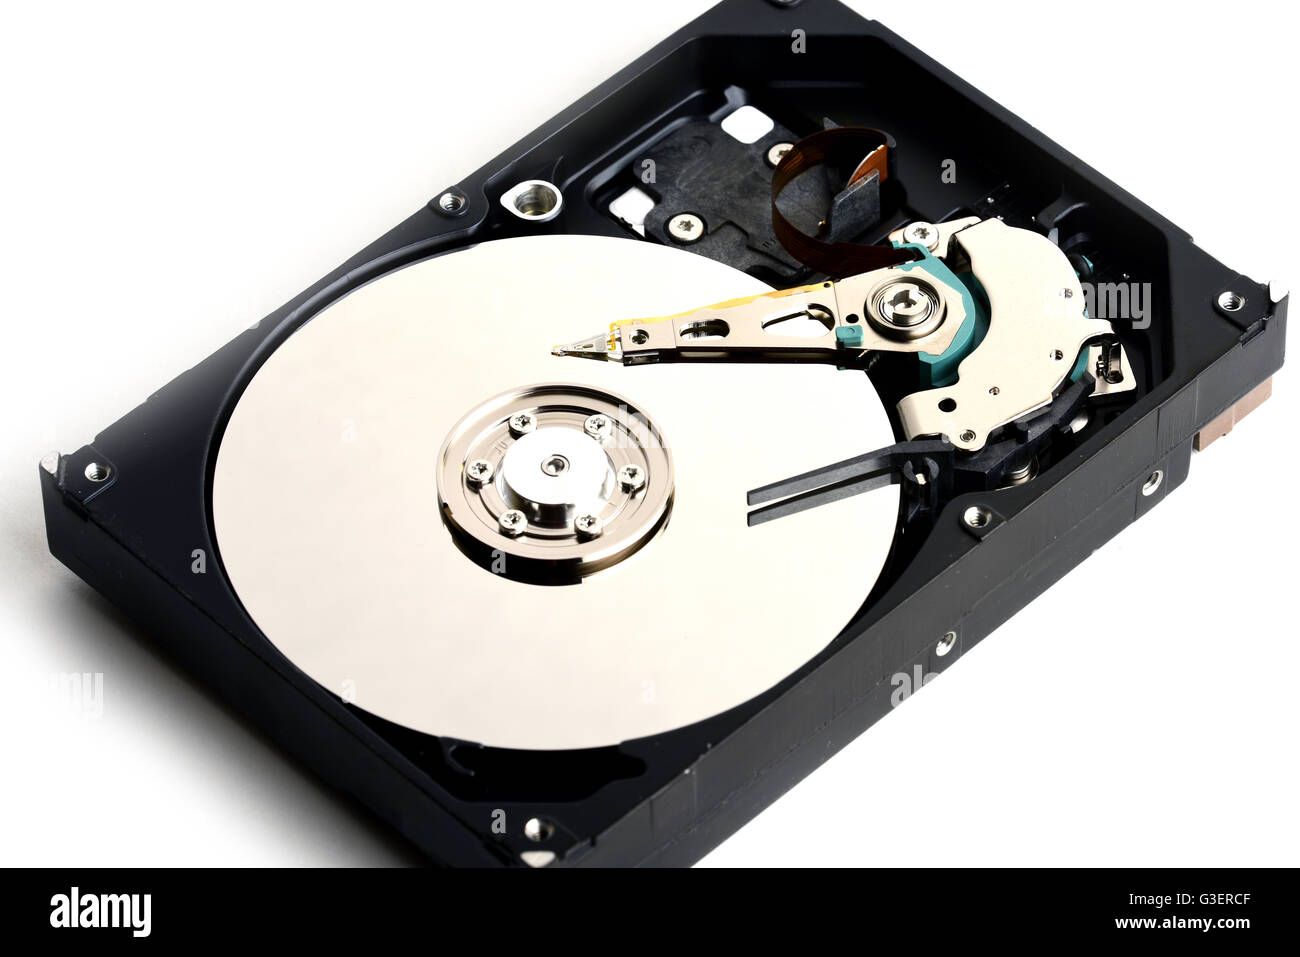 Computer sata hard disk drive inside internals Stock Photo